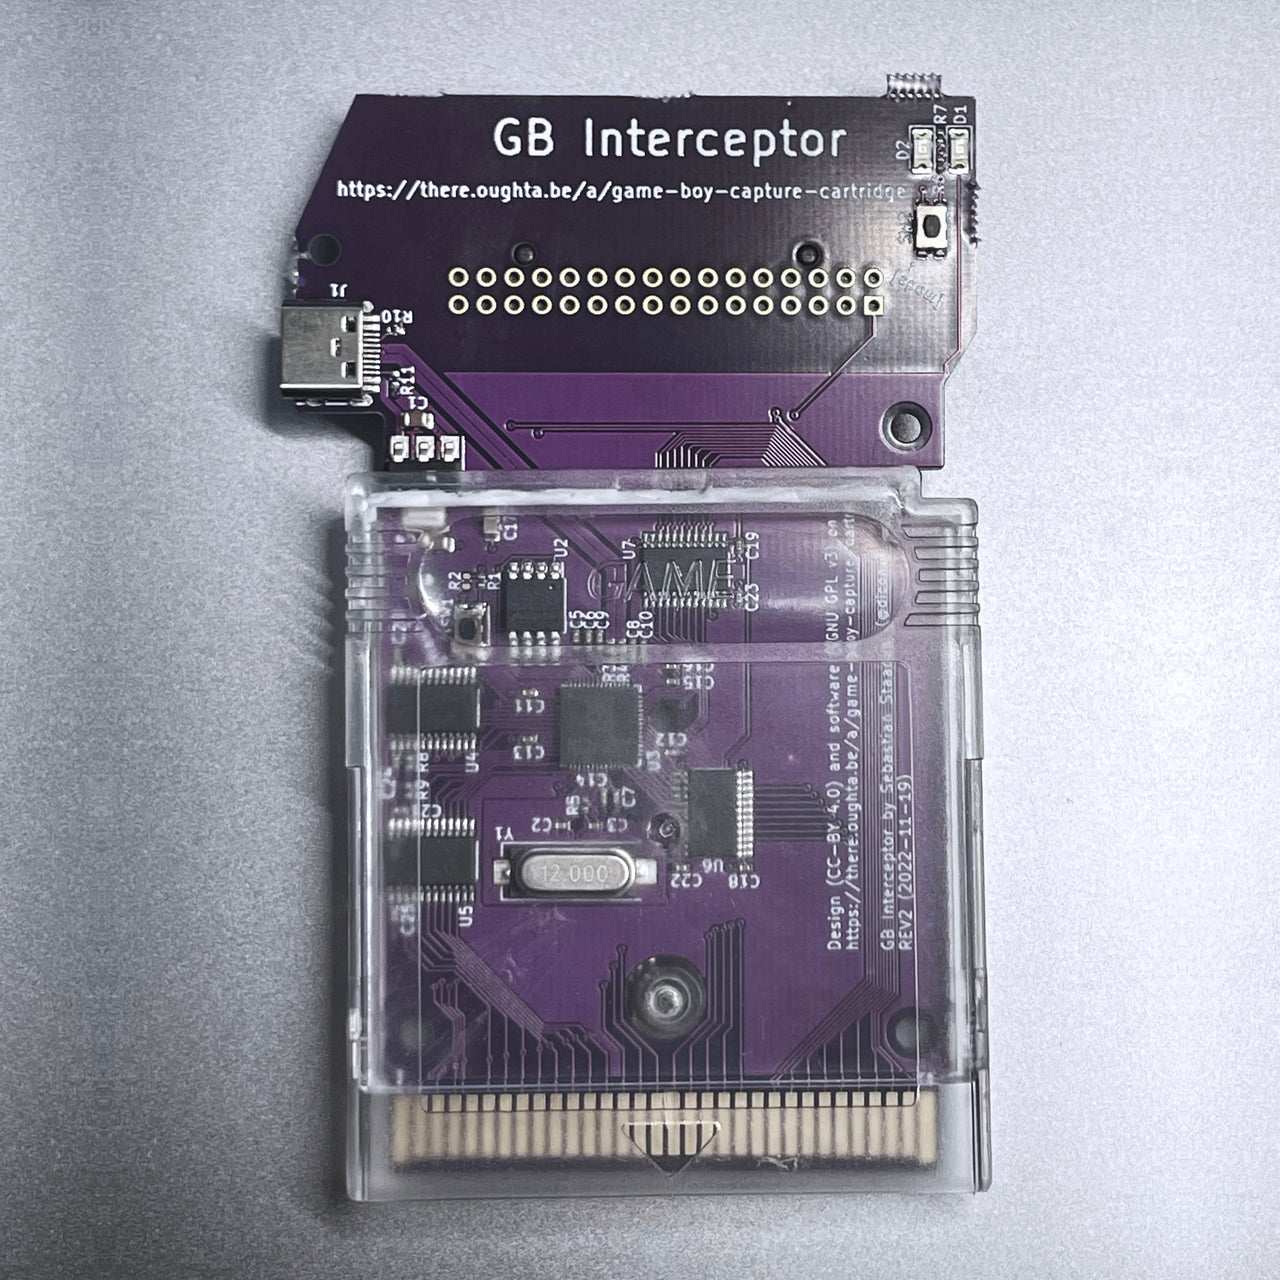 GB Interceptor  〈Game Boy video capture〉